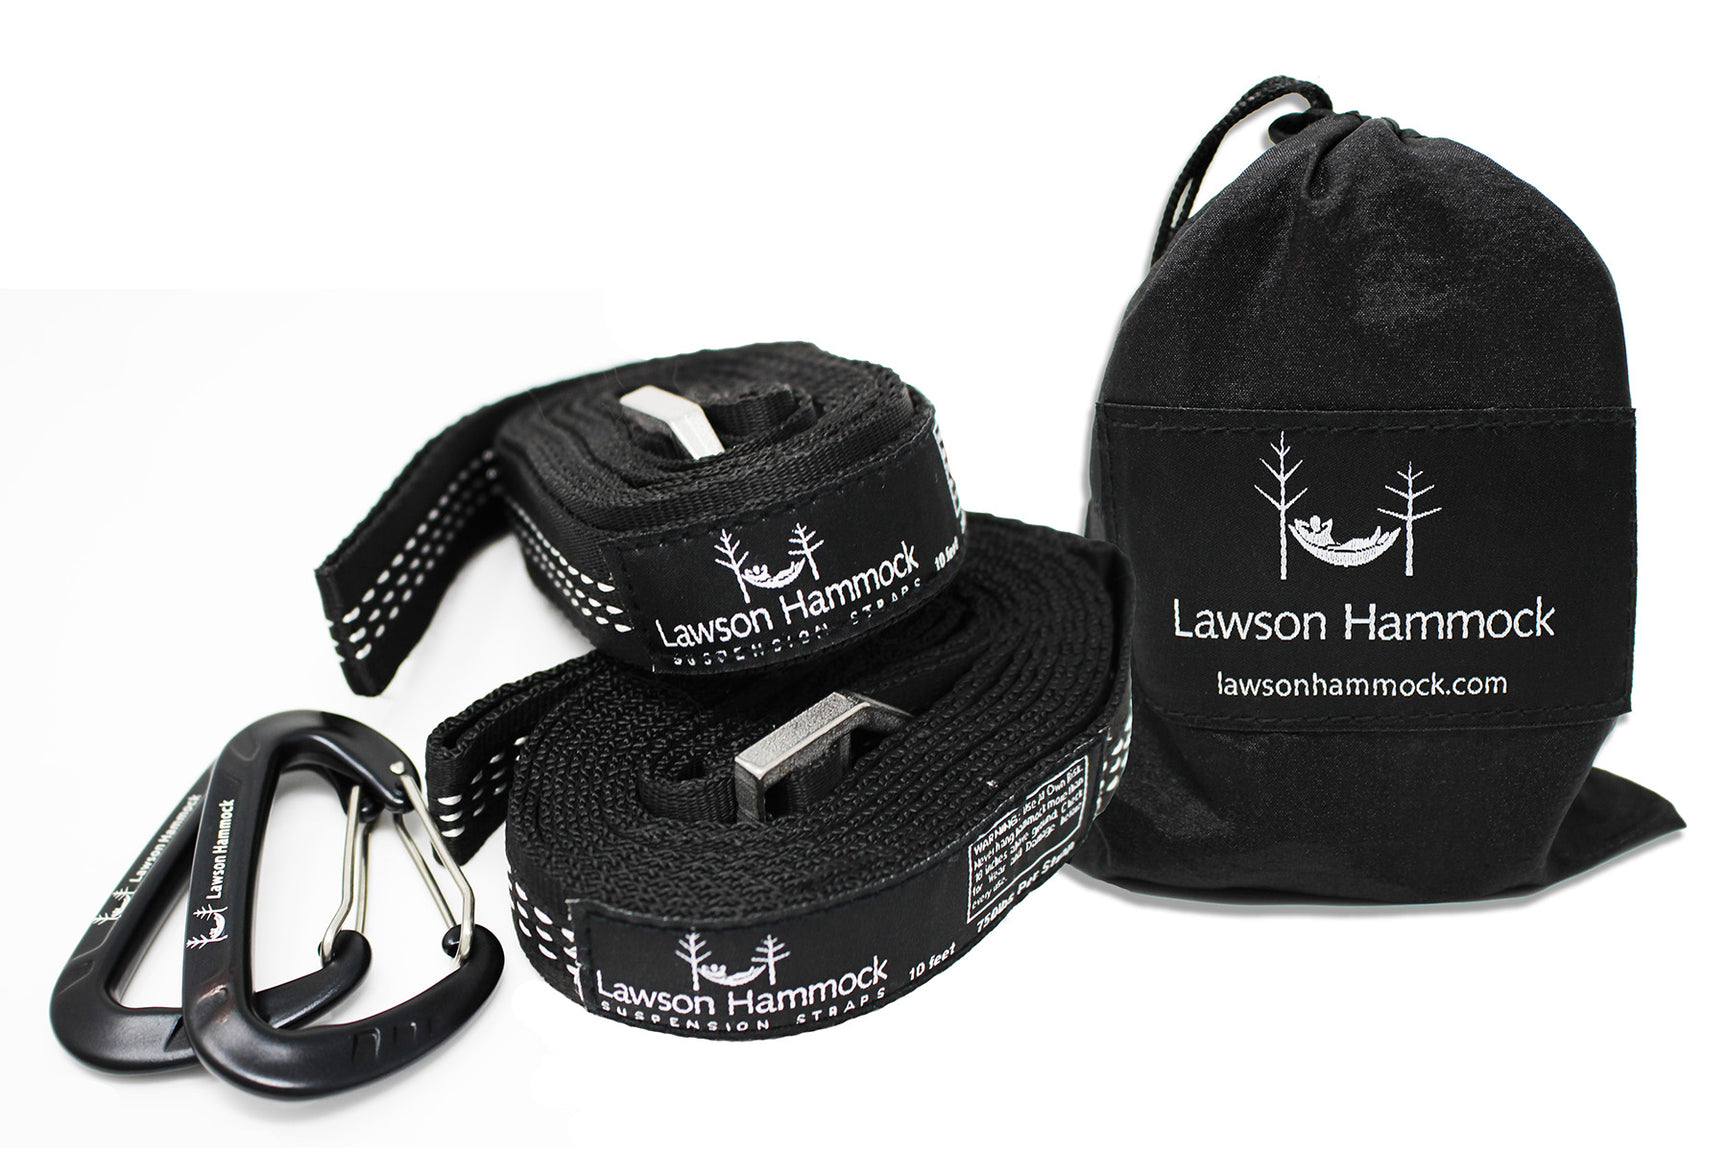 Lawson Hammock Suspension System (Hammock Straps + Carabiners)